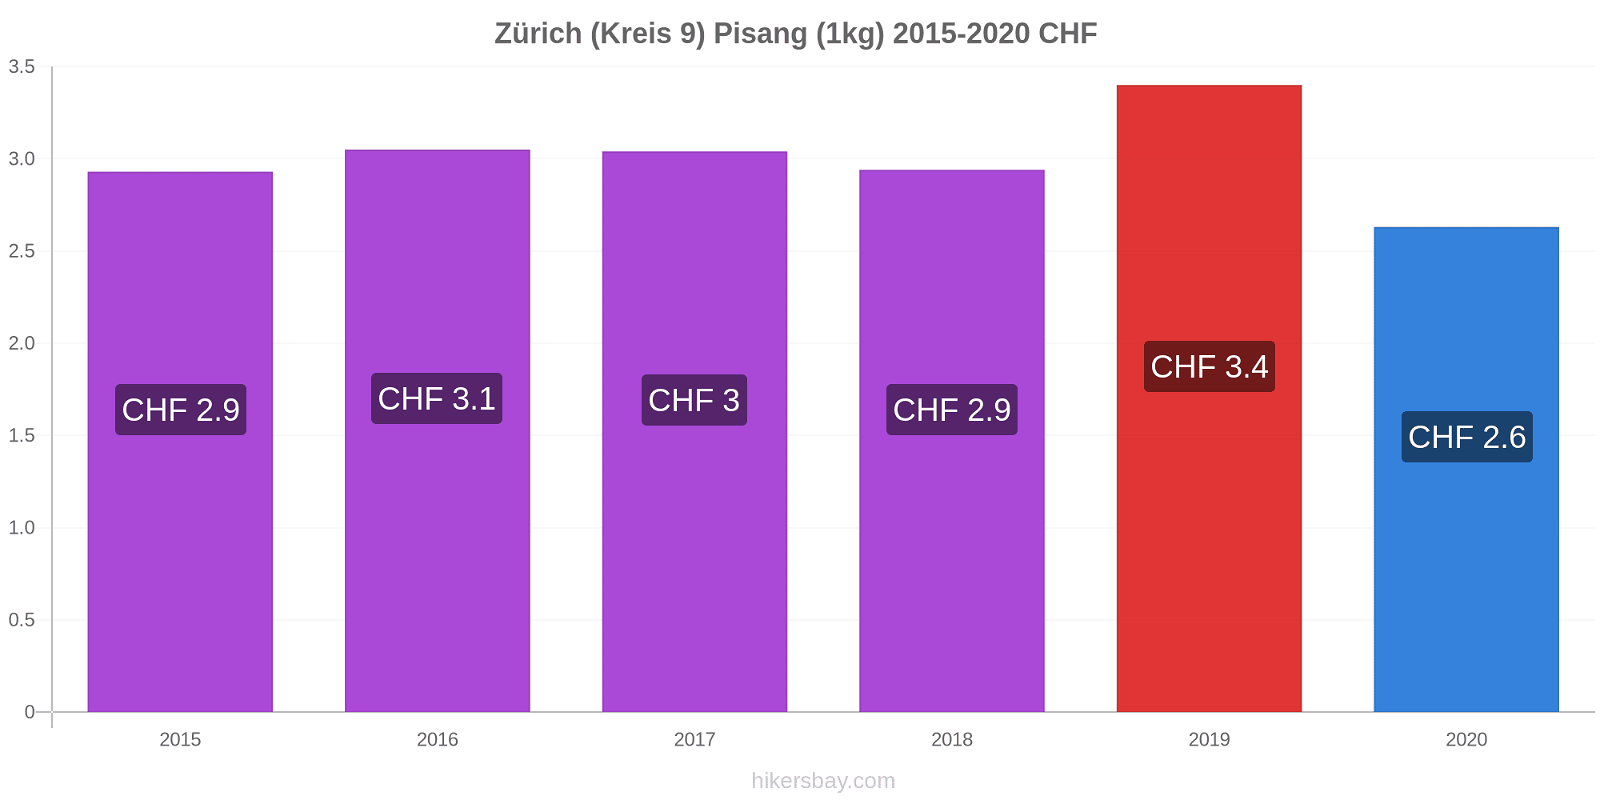 Zürich (Kreis 9) perubahan harga Pisang (1kg) hikersbay.com